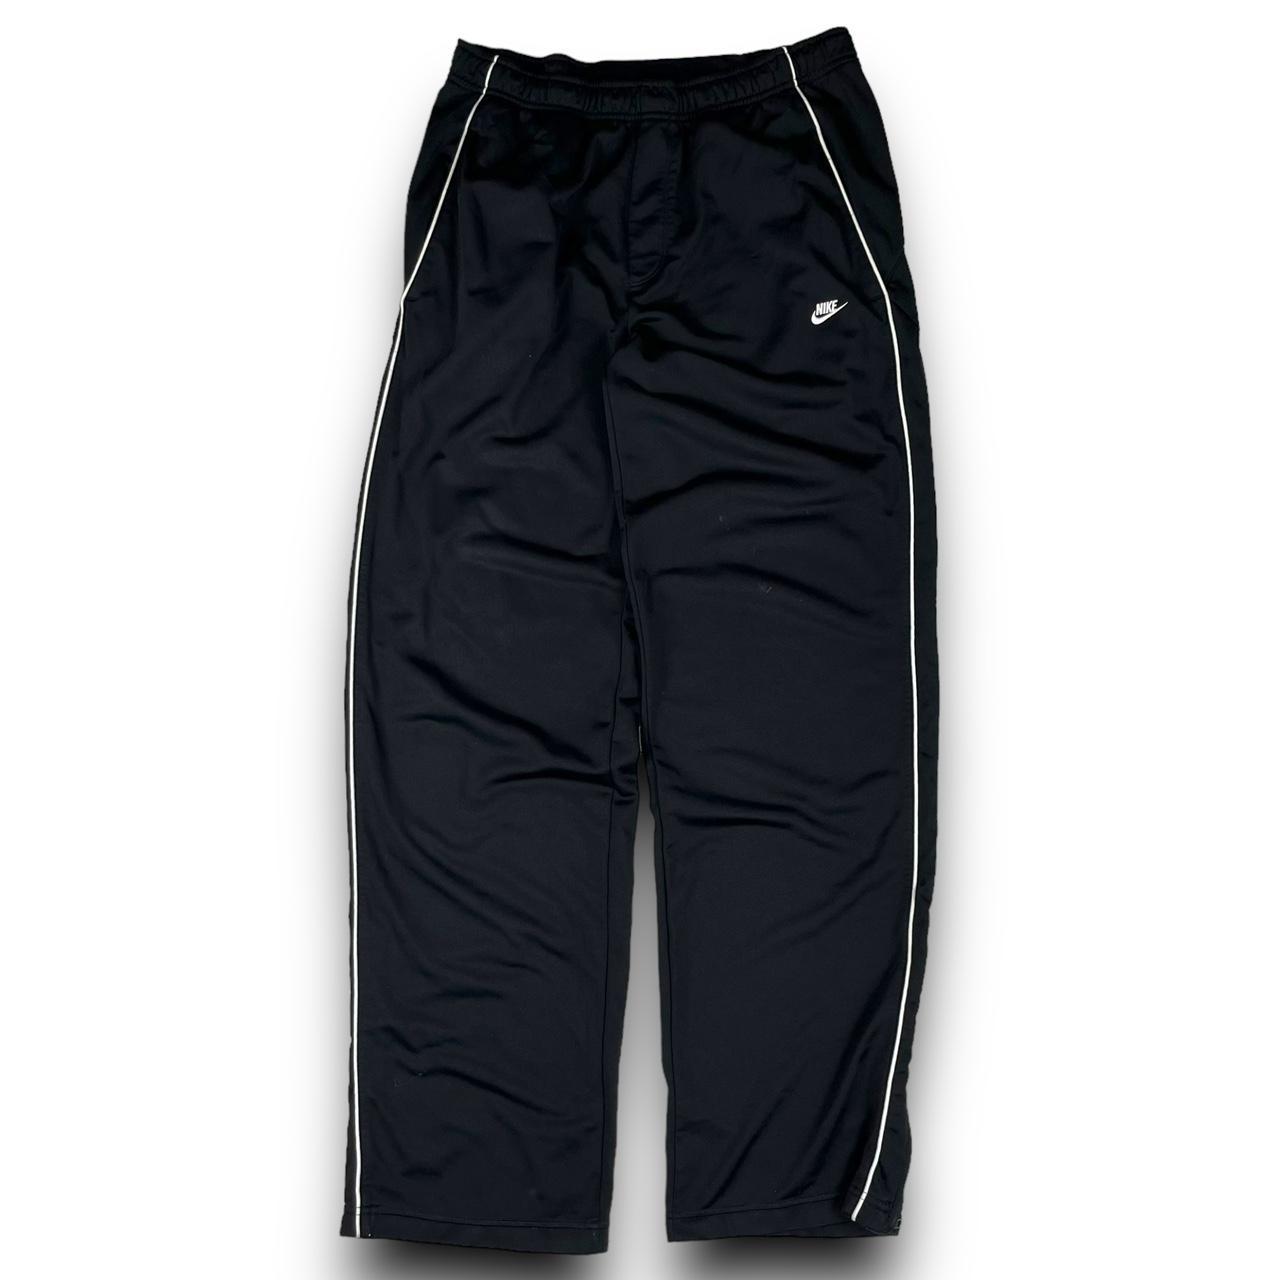 Nike Sportswear WIDE LEG PANT - Tracksuit bottoms - black/white